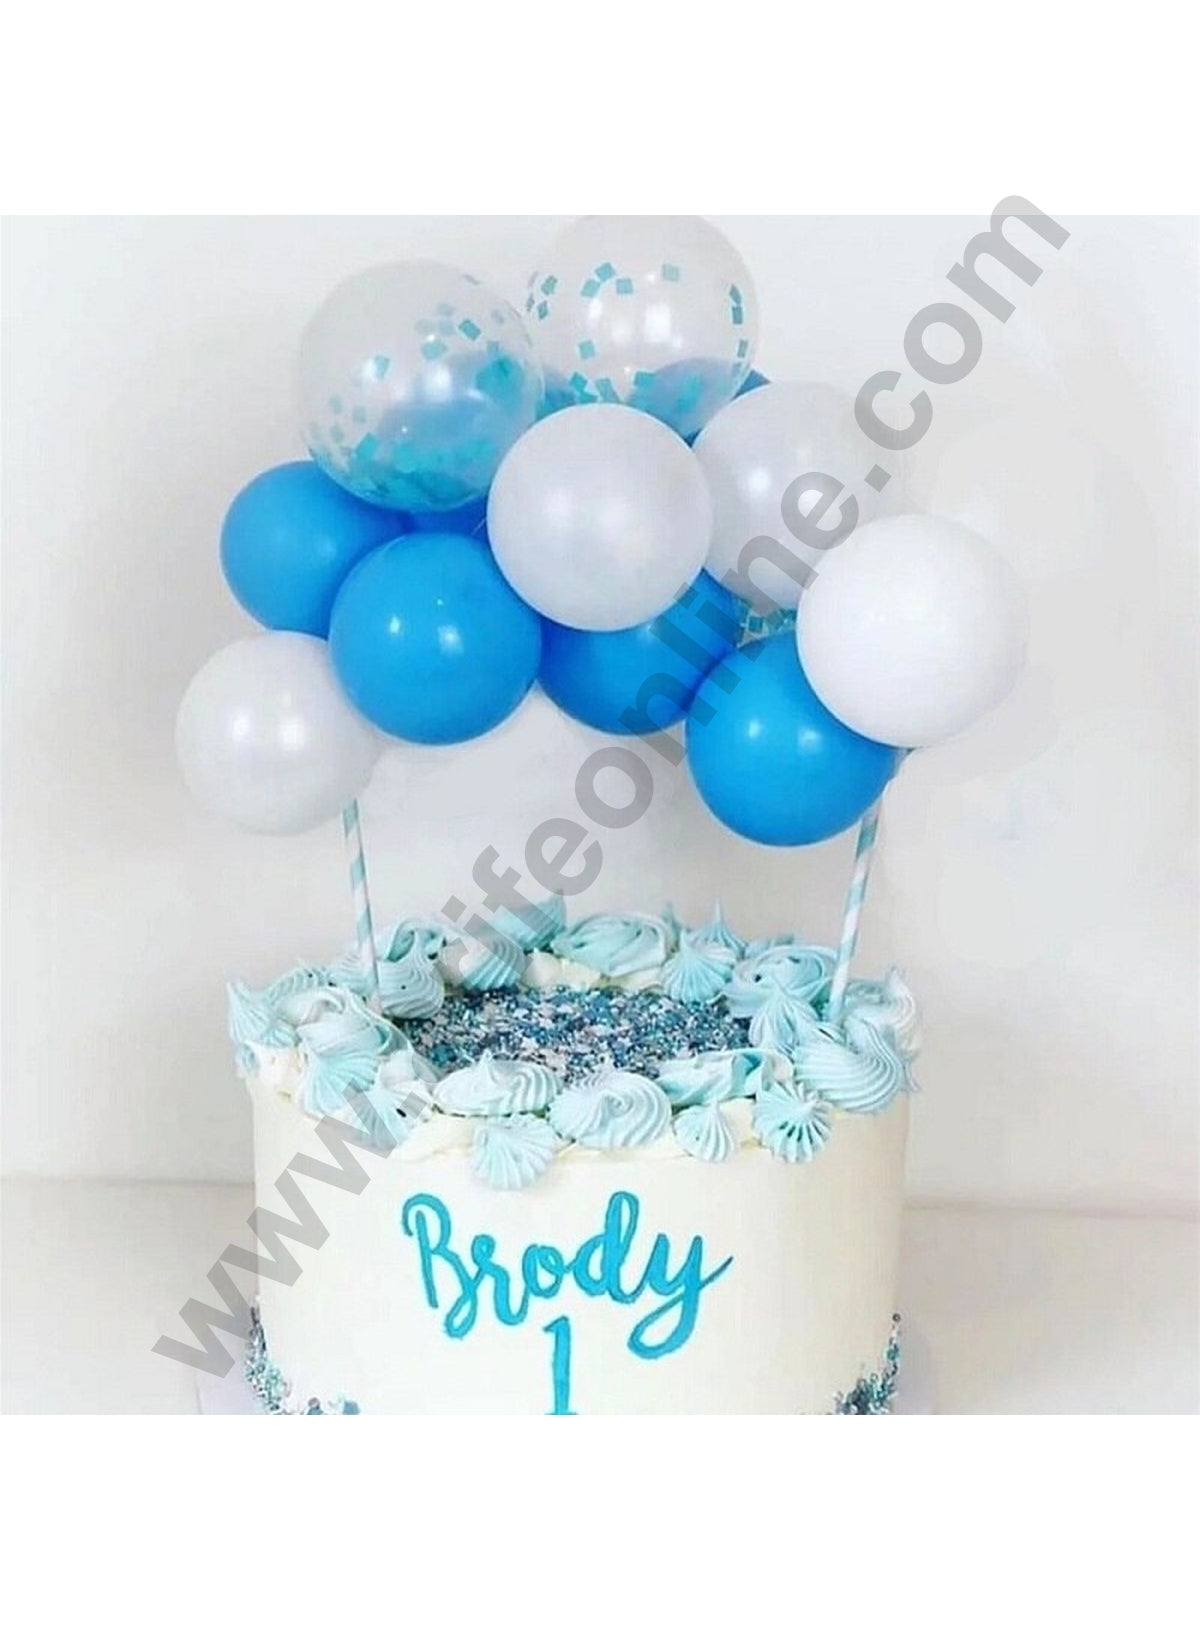 ROSE GOLD BALLOON CONFETTI CAKE TOPPER WEDDING PARTY BIRTHDAY BRIDAL HEN  BABY | eBay